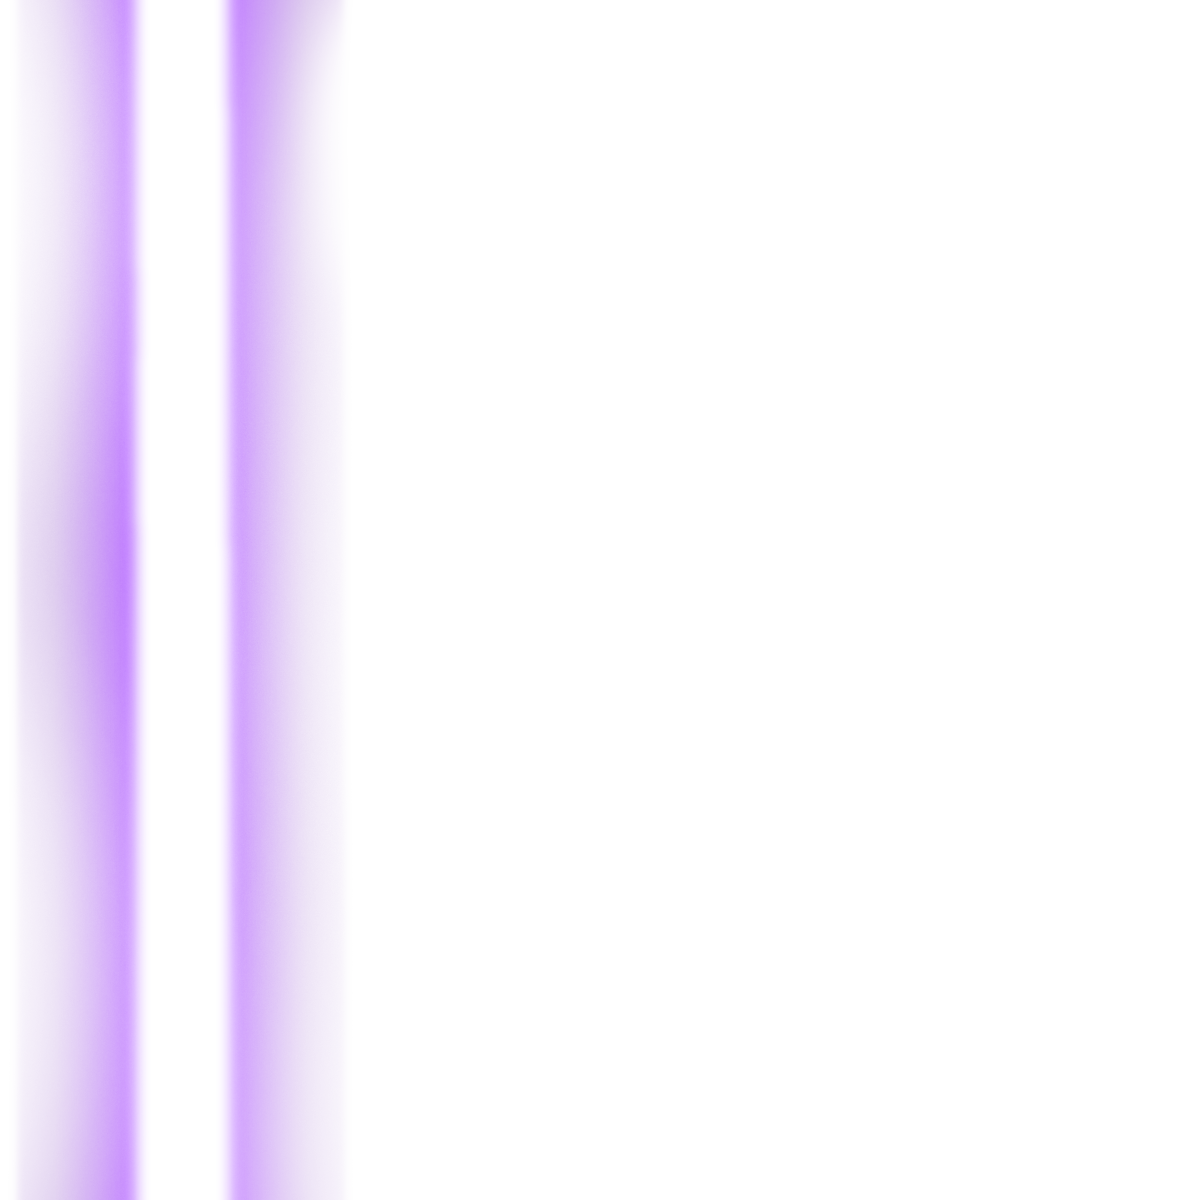 Unofficial Star Wars Purple Lightsaber Filter